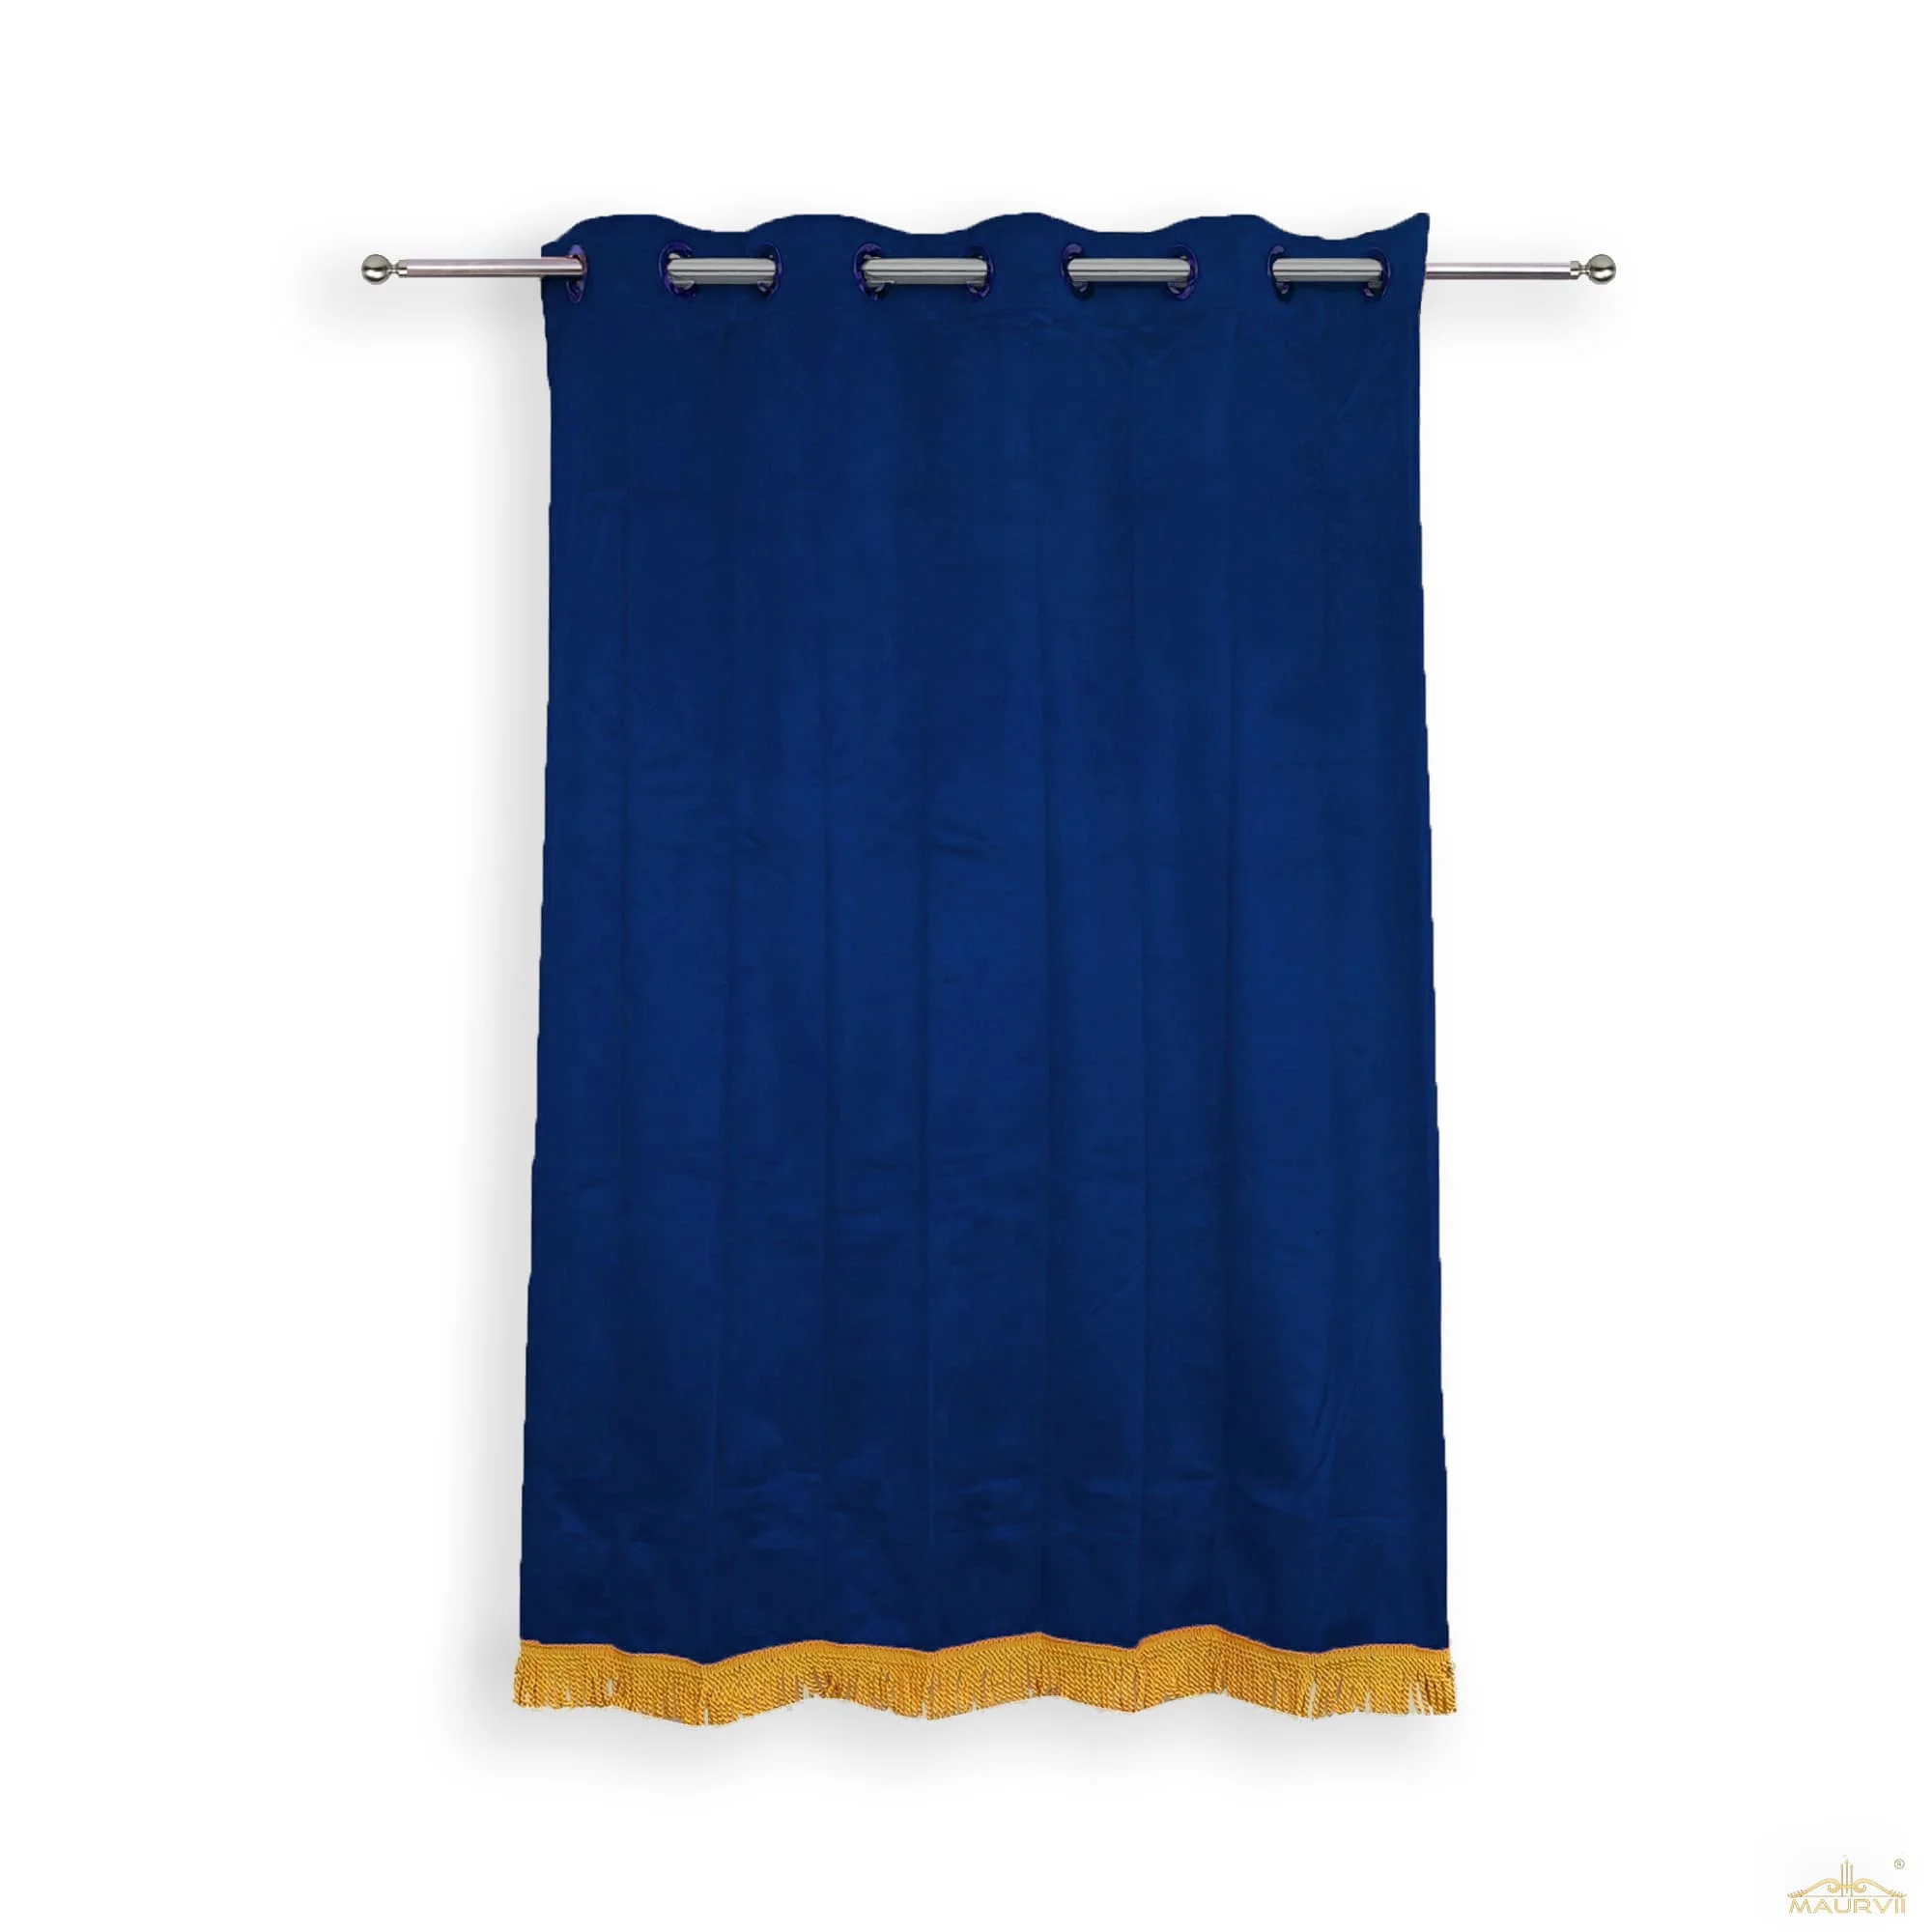 Decorative navy blue curtains